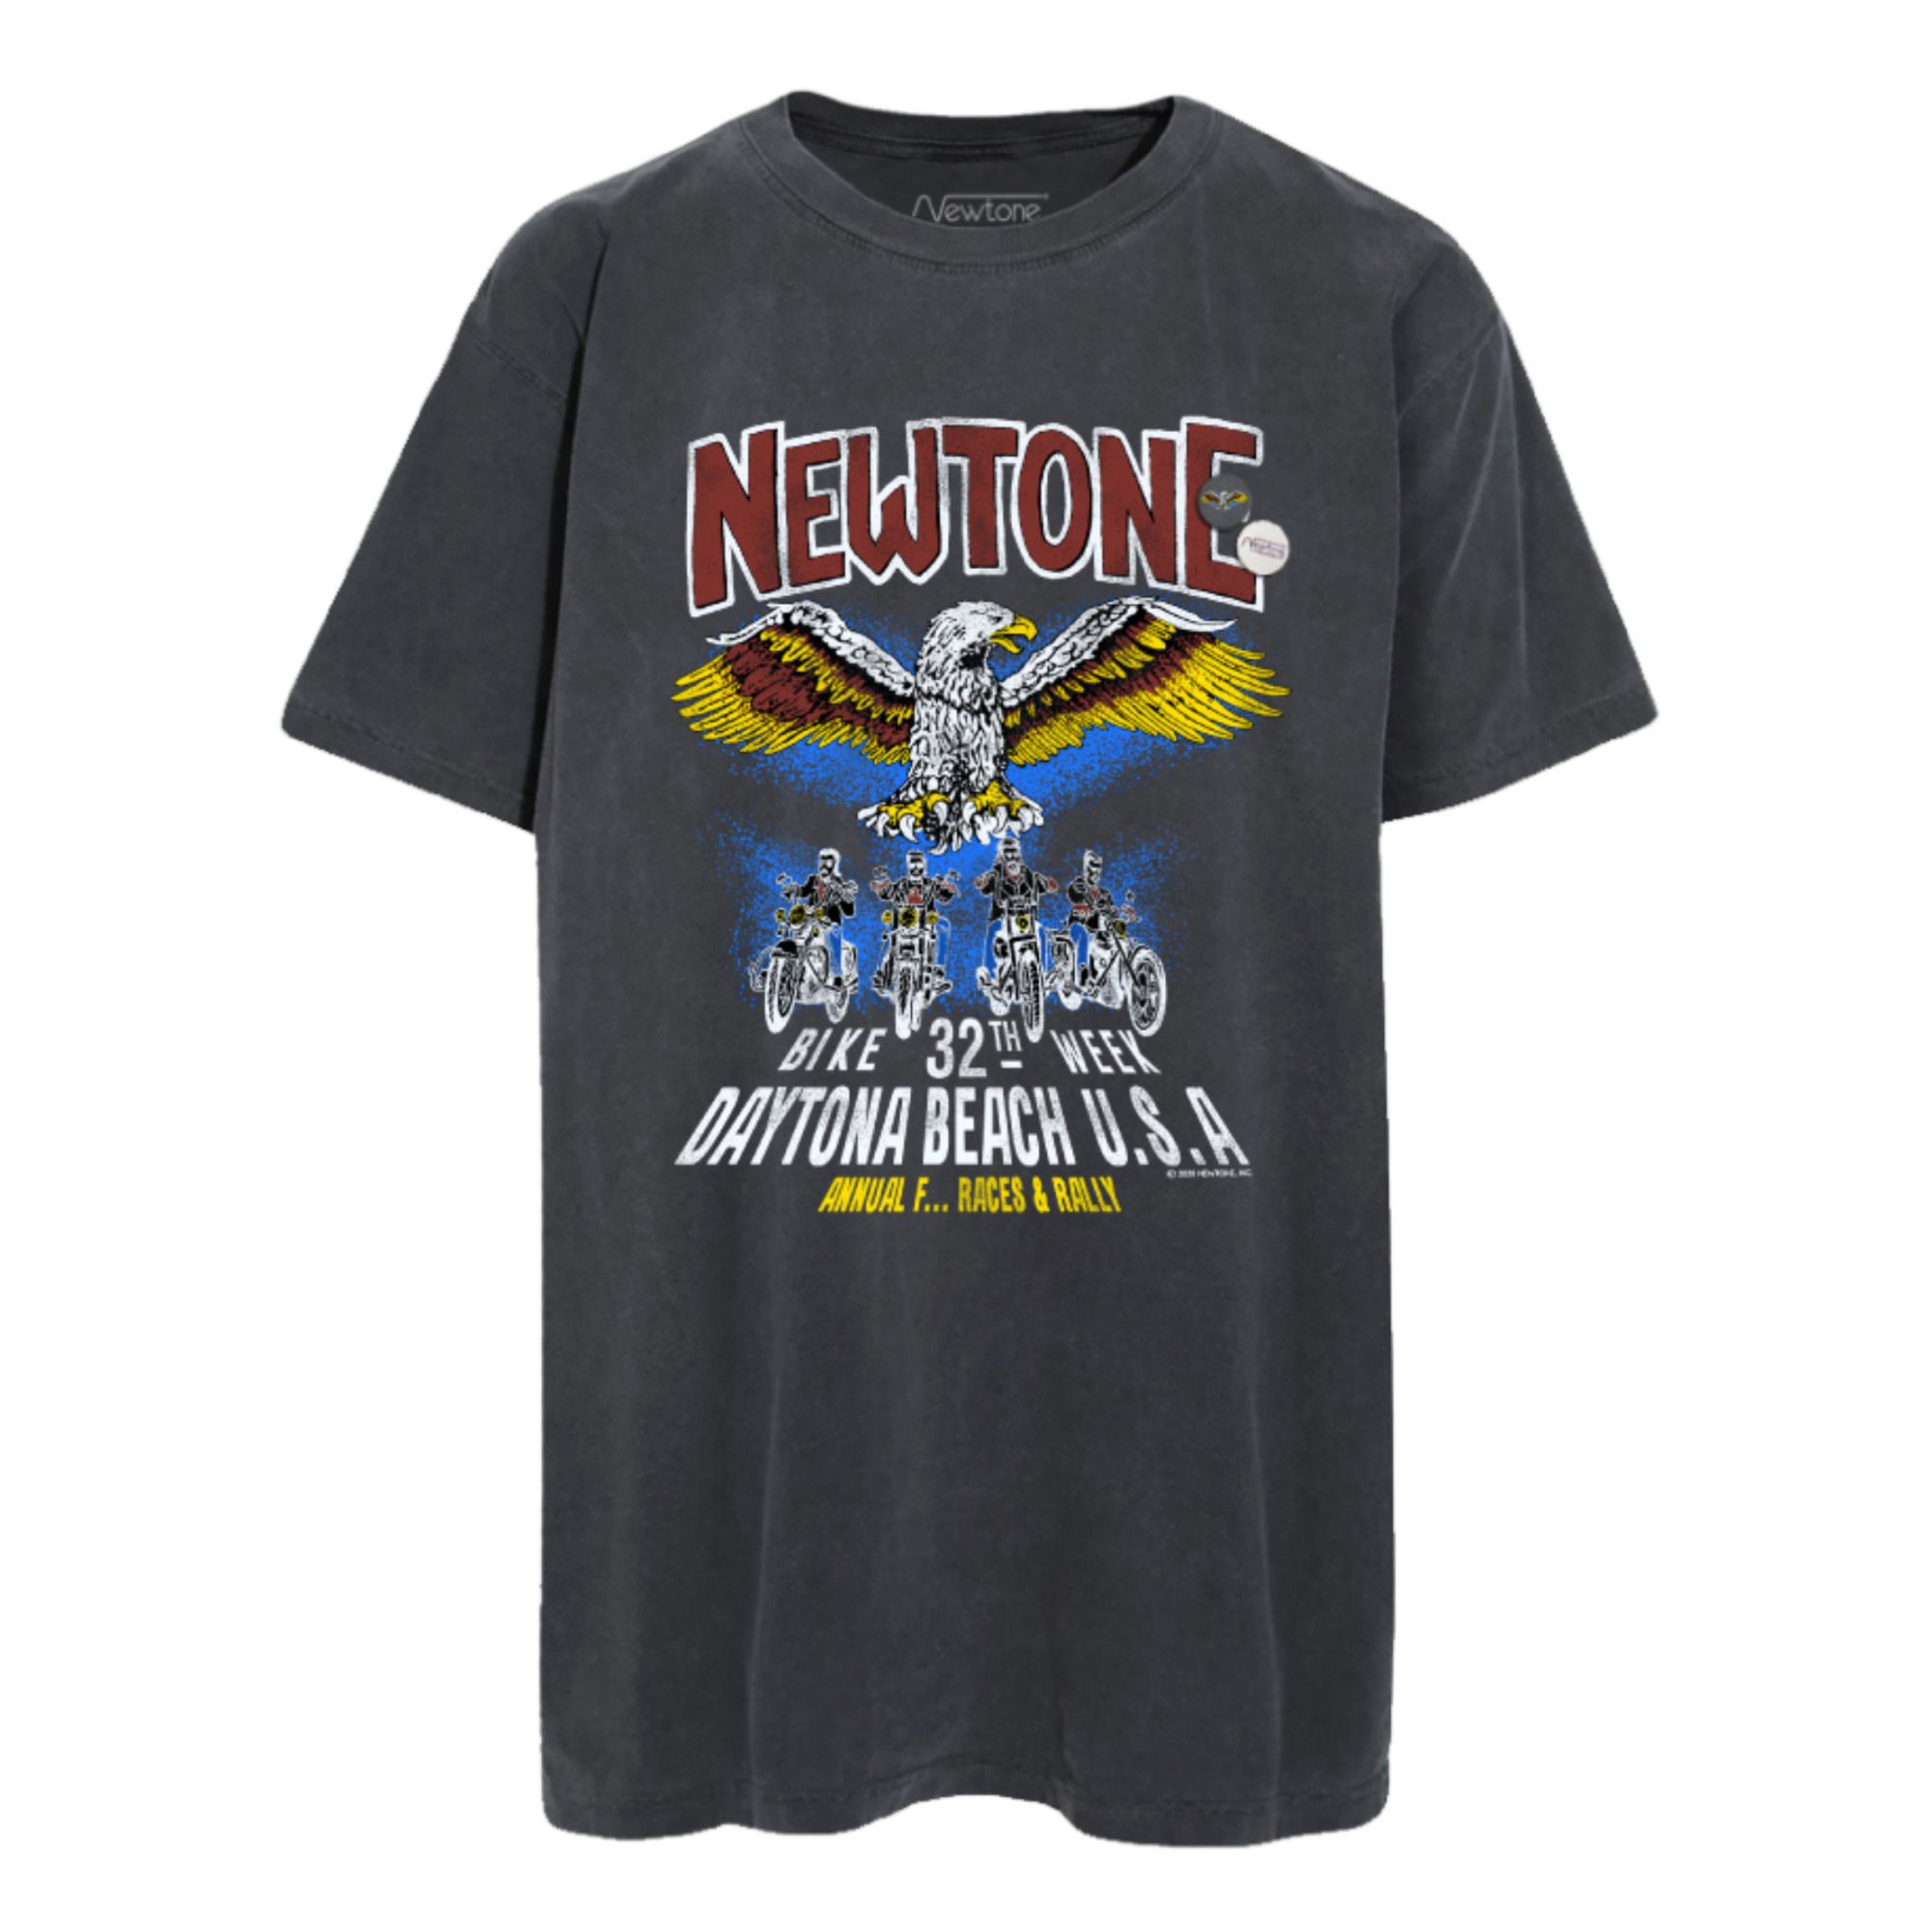 Newtone - T-Shirt Trucker Convention - Femme - Gris anthracite